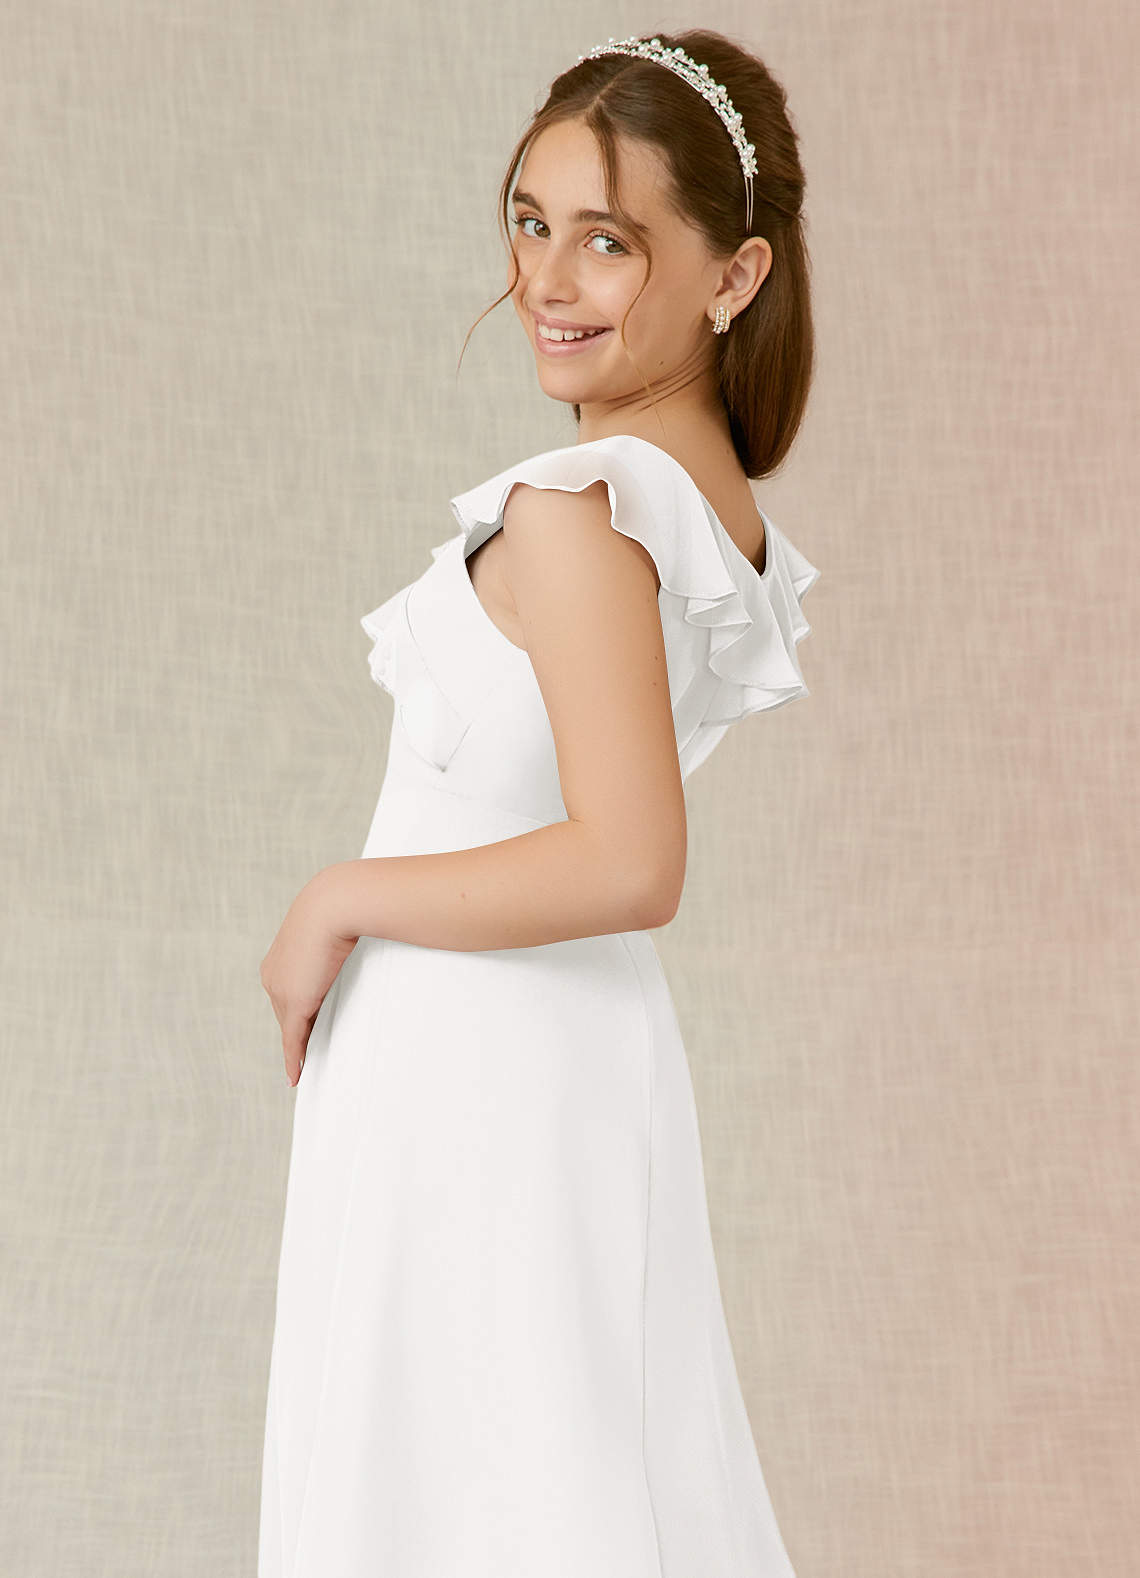 Azazie Alyssa A-Line Chiffon Floor-Length Junior Bridesmaid Dress image1